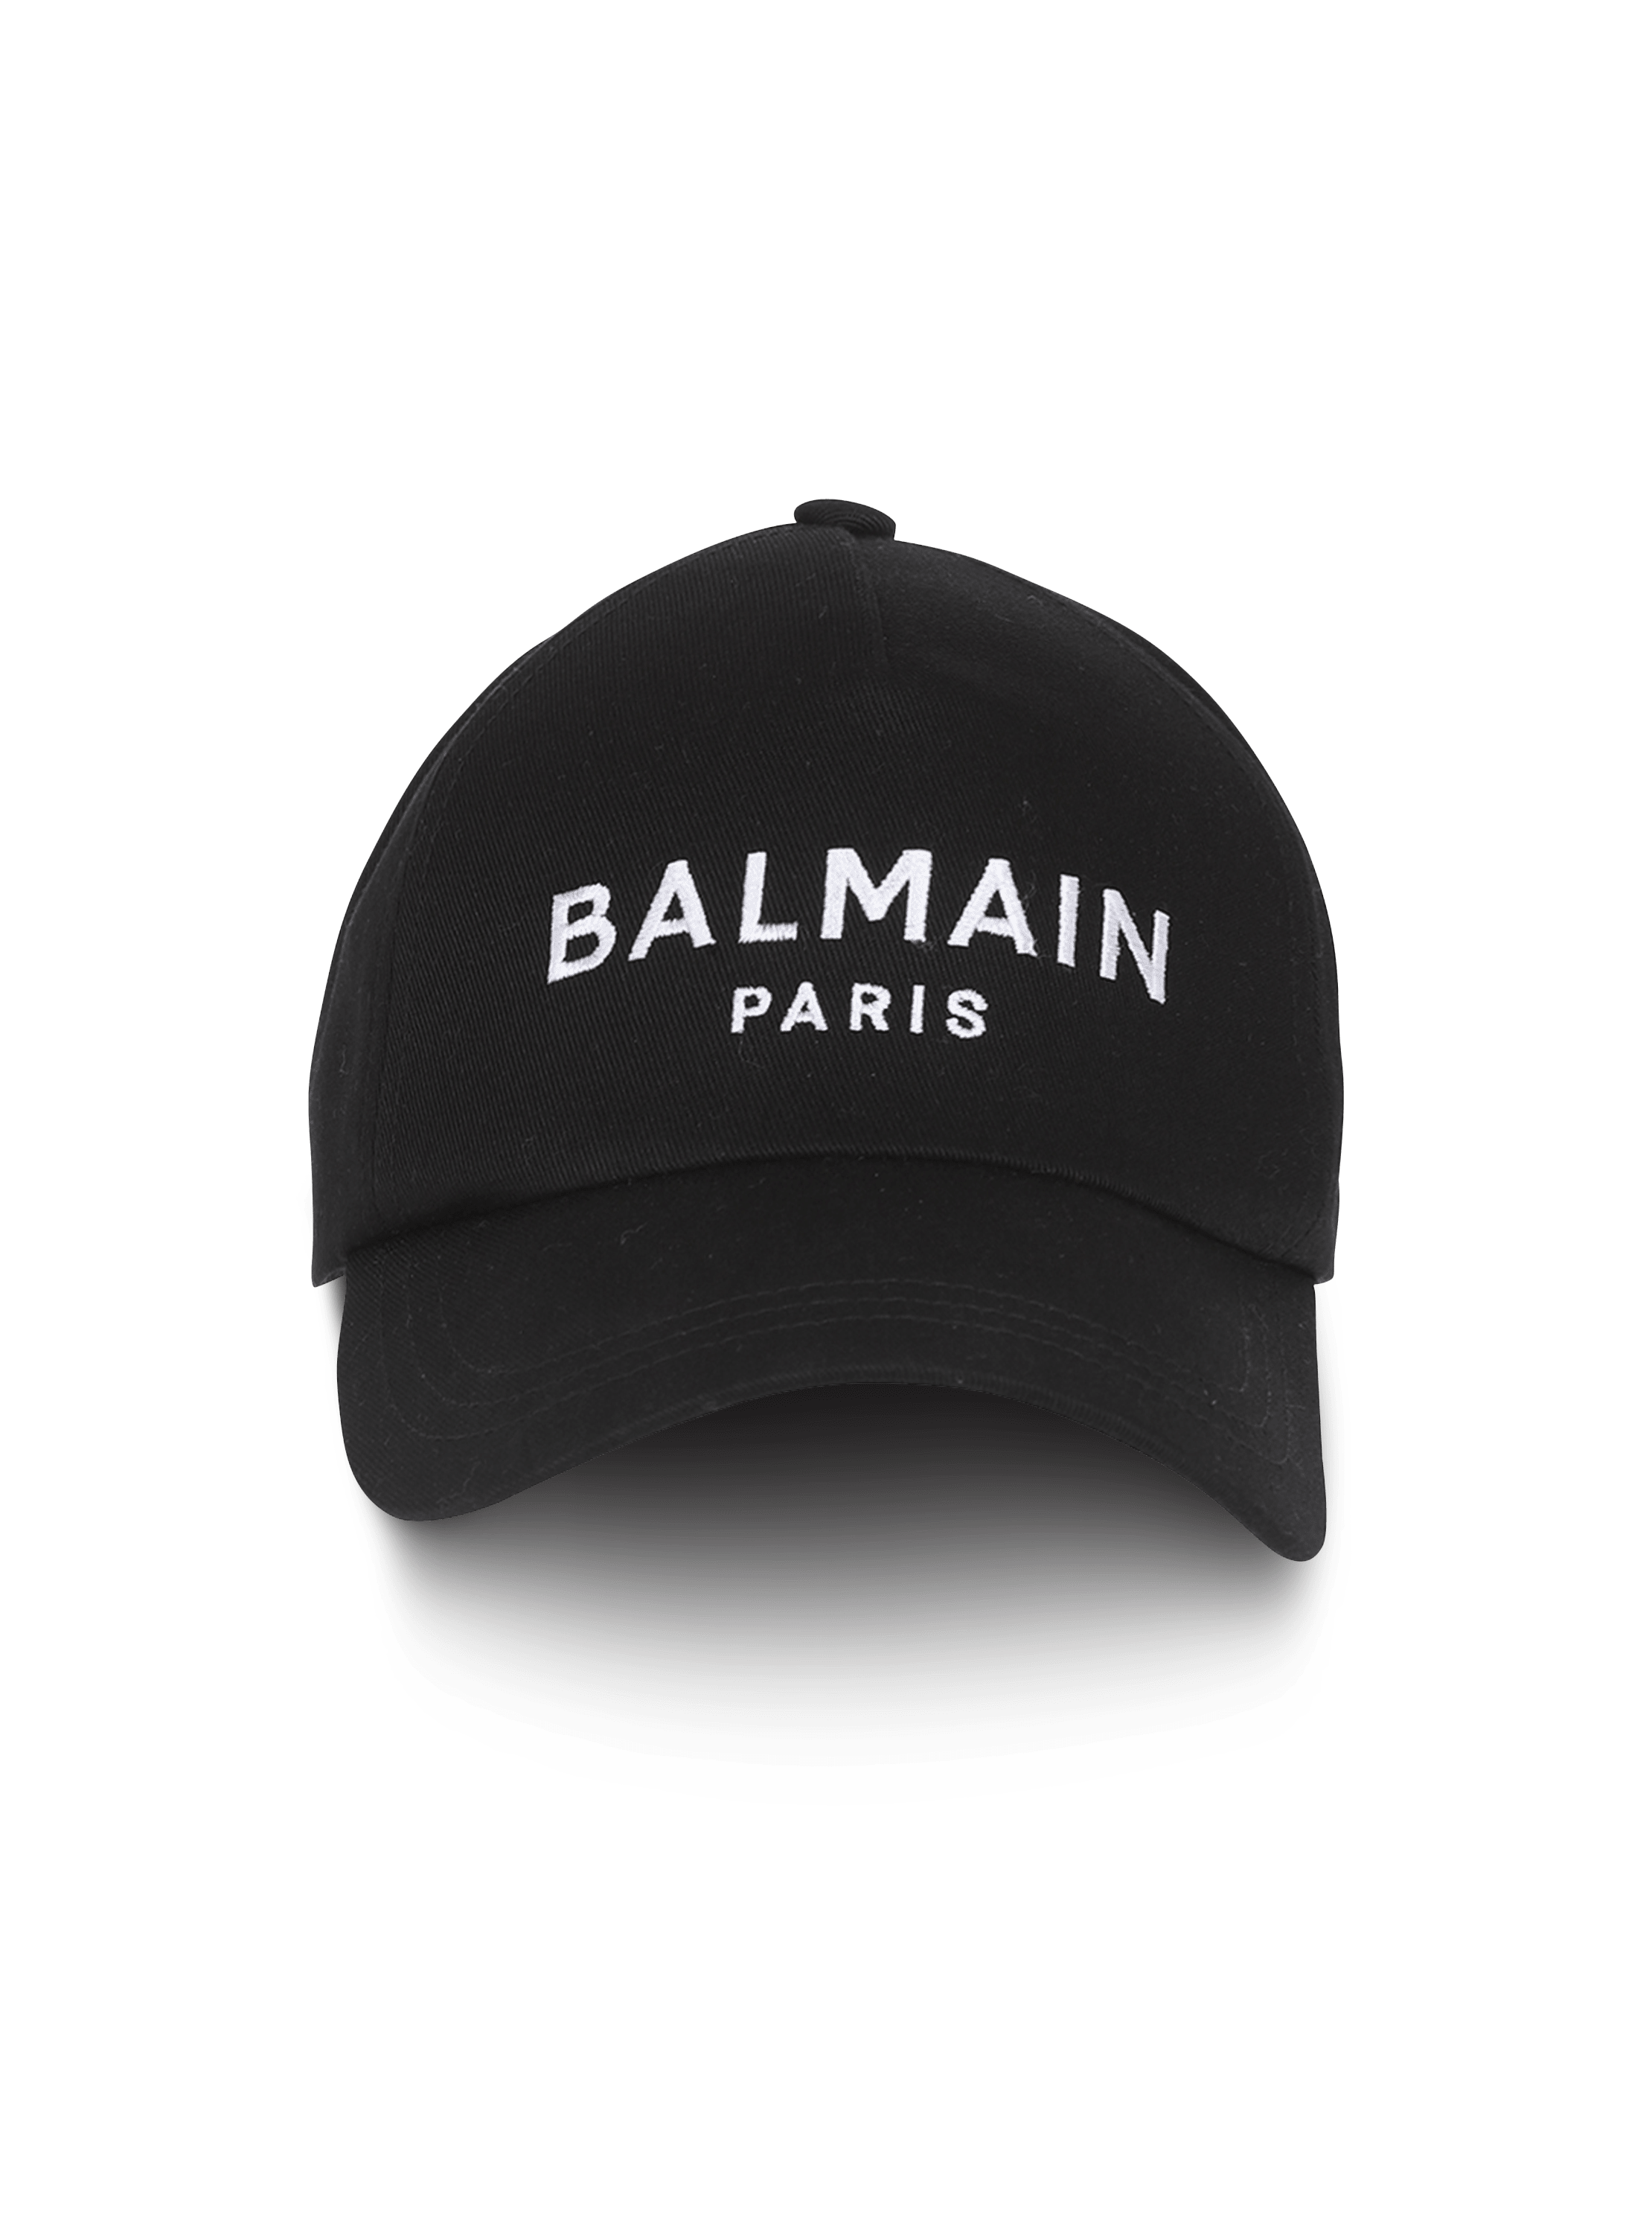 Embroidered Balmain Paris cap black - Women | BALMAIN